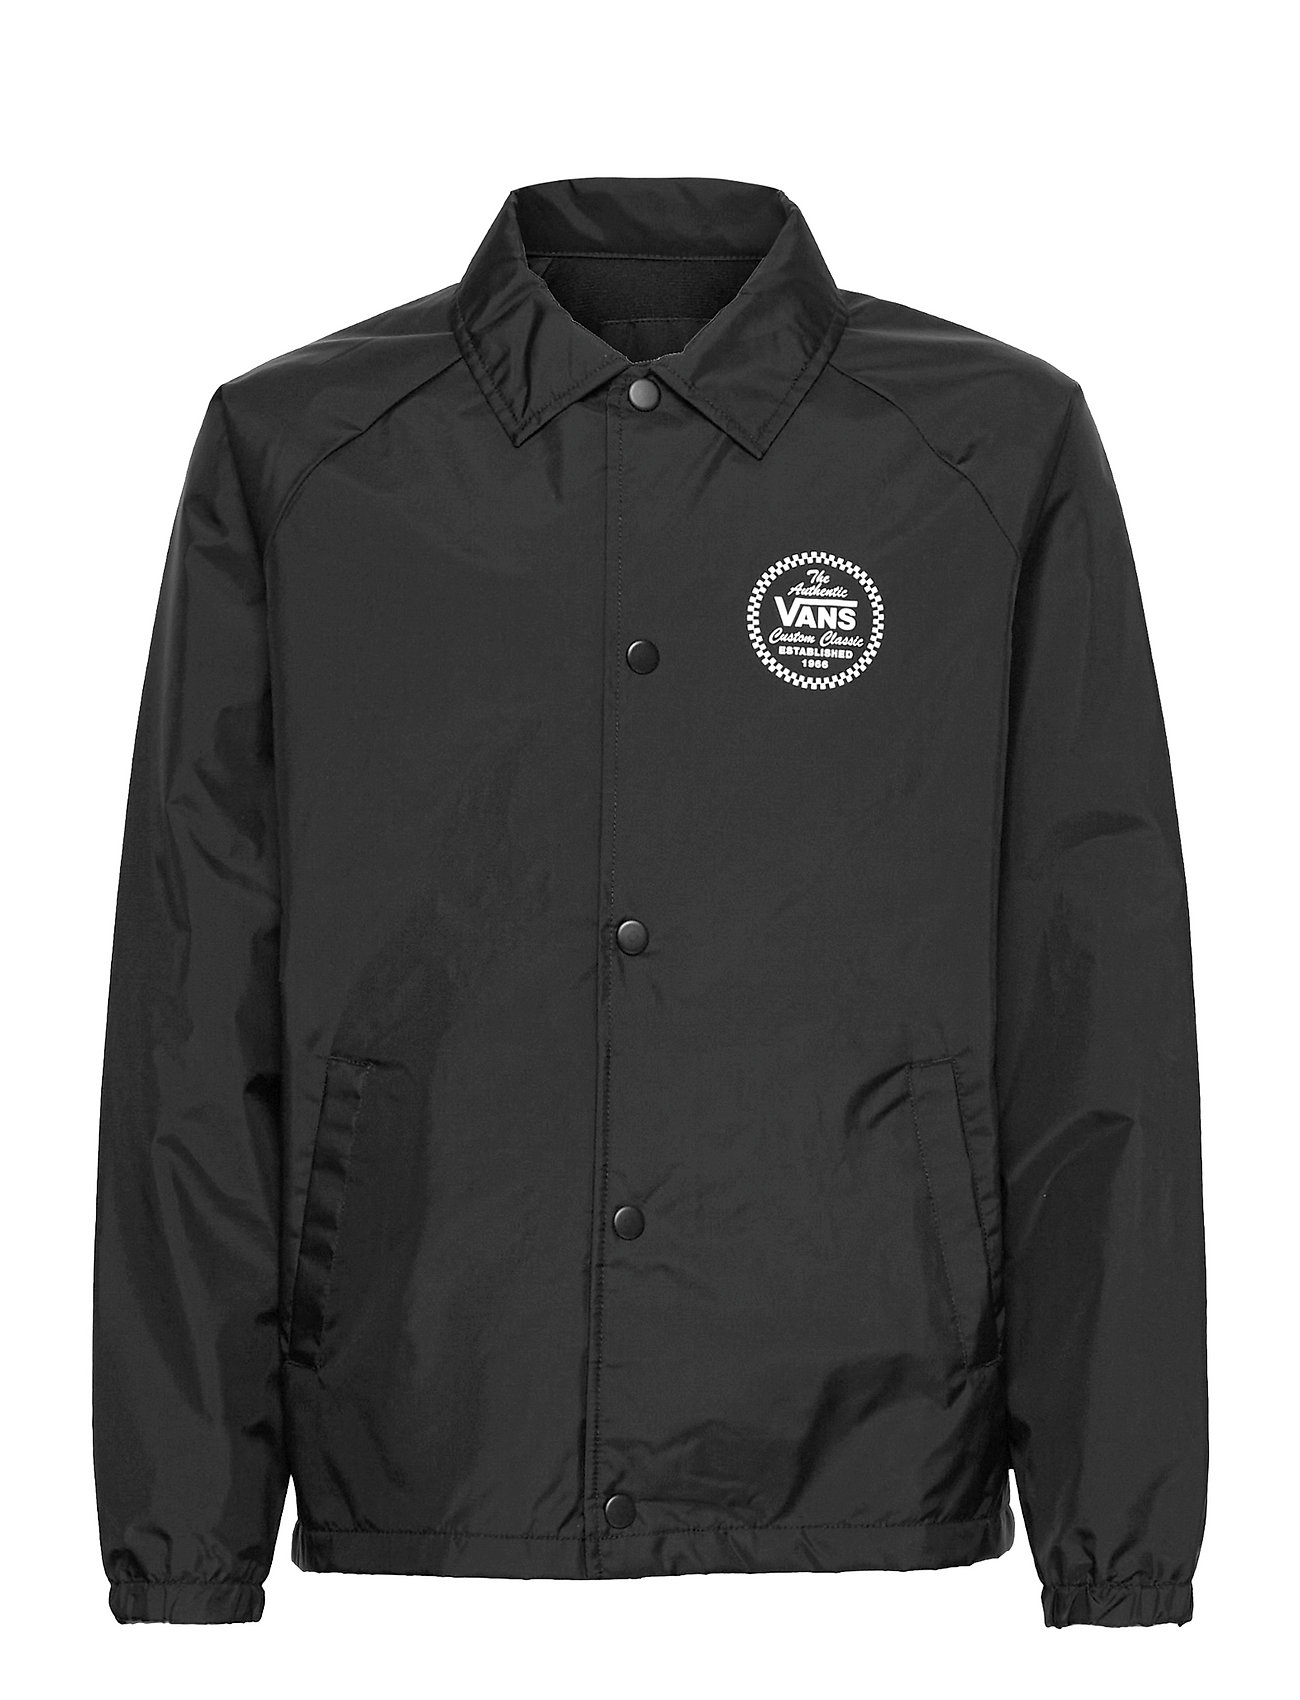 By Torrey Ii Boys Sport Jackets & Coats Light Jackets Black VANS